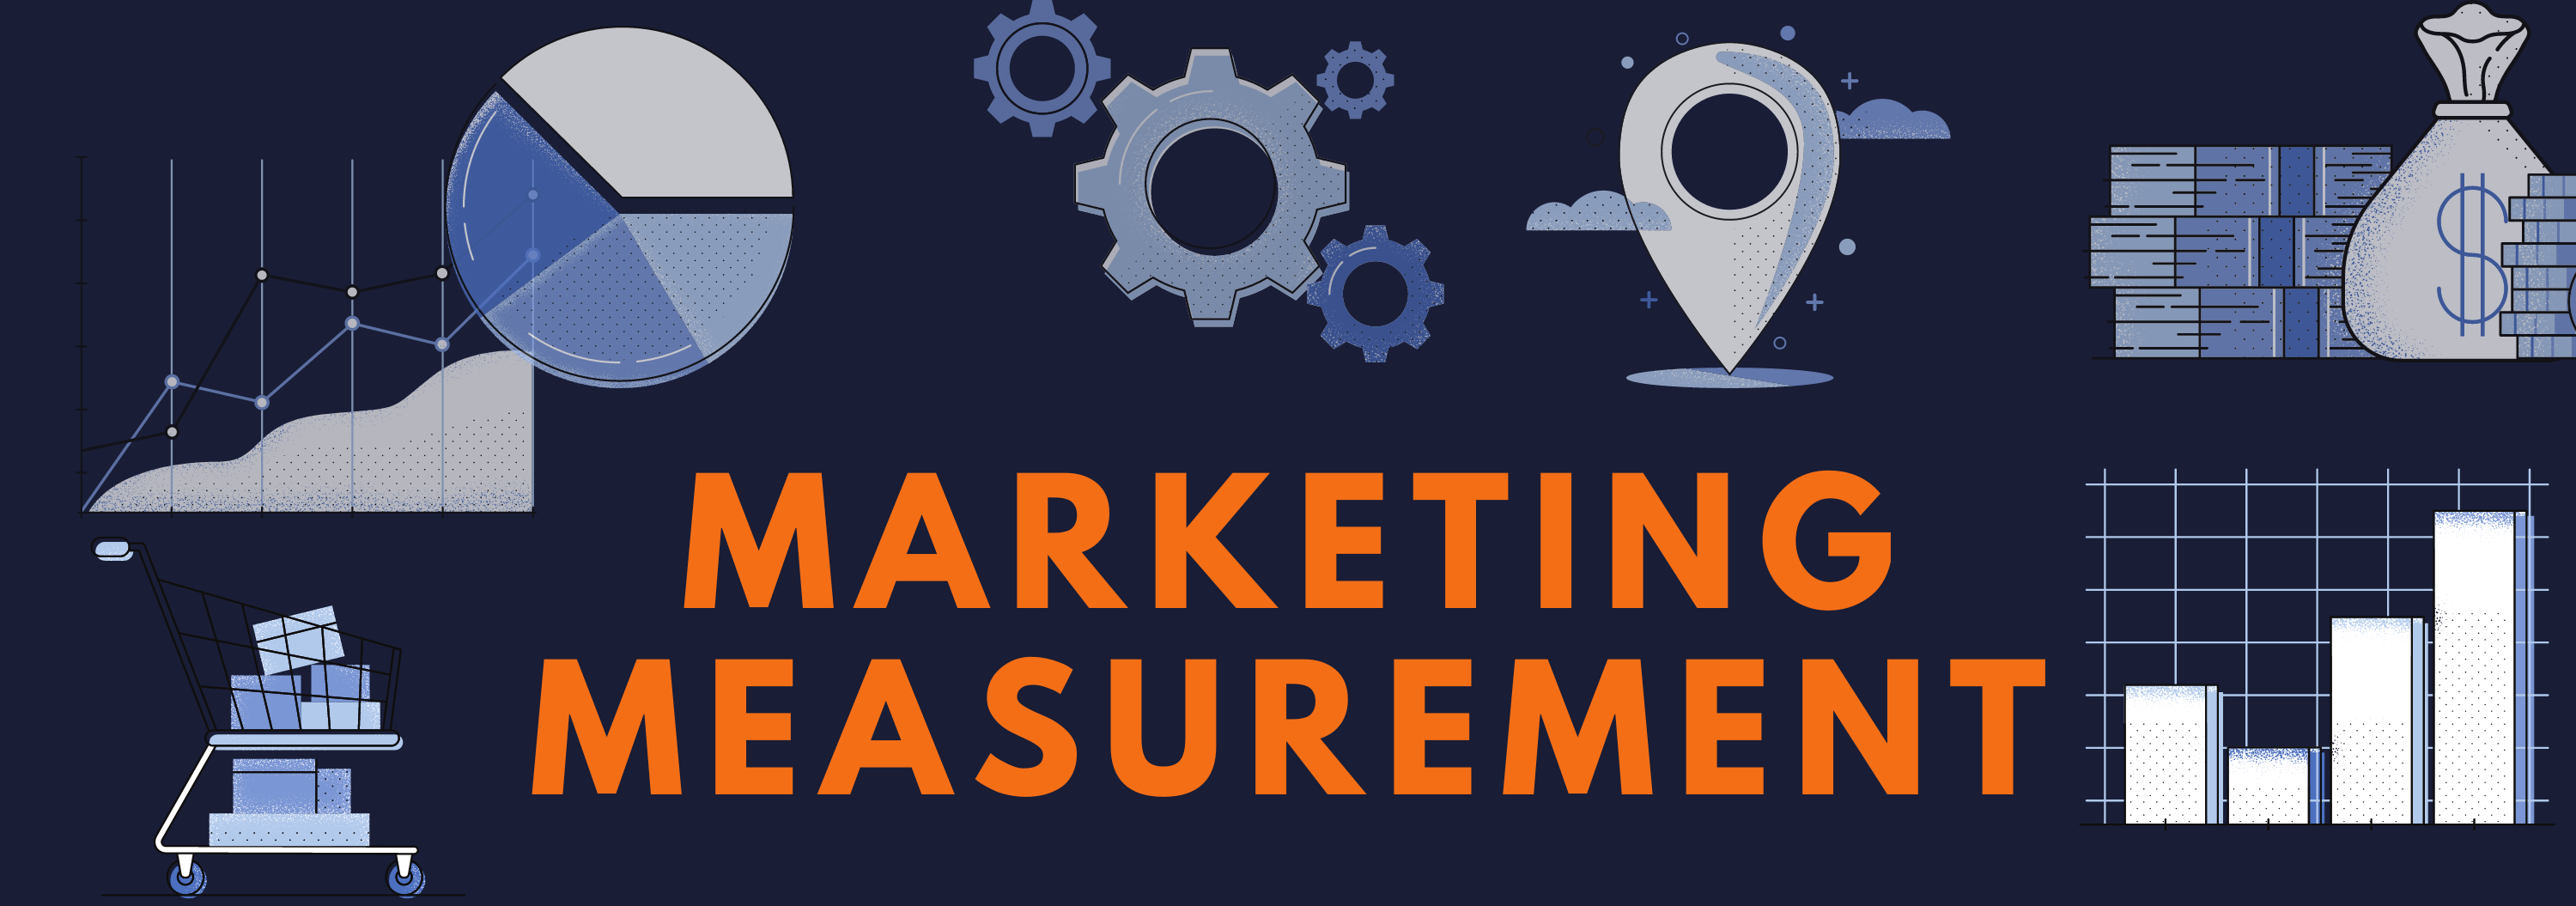 Marketing Measurement Blog